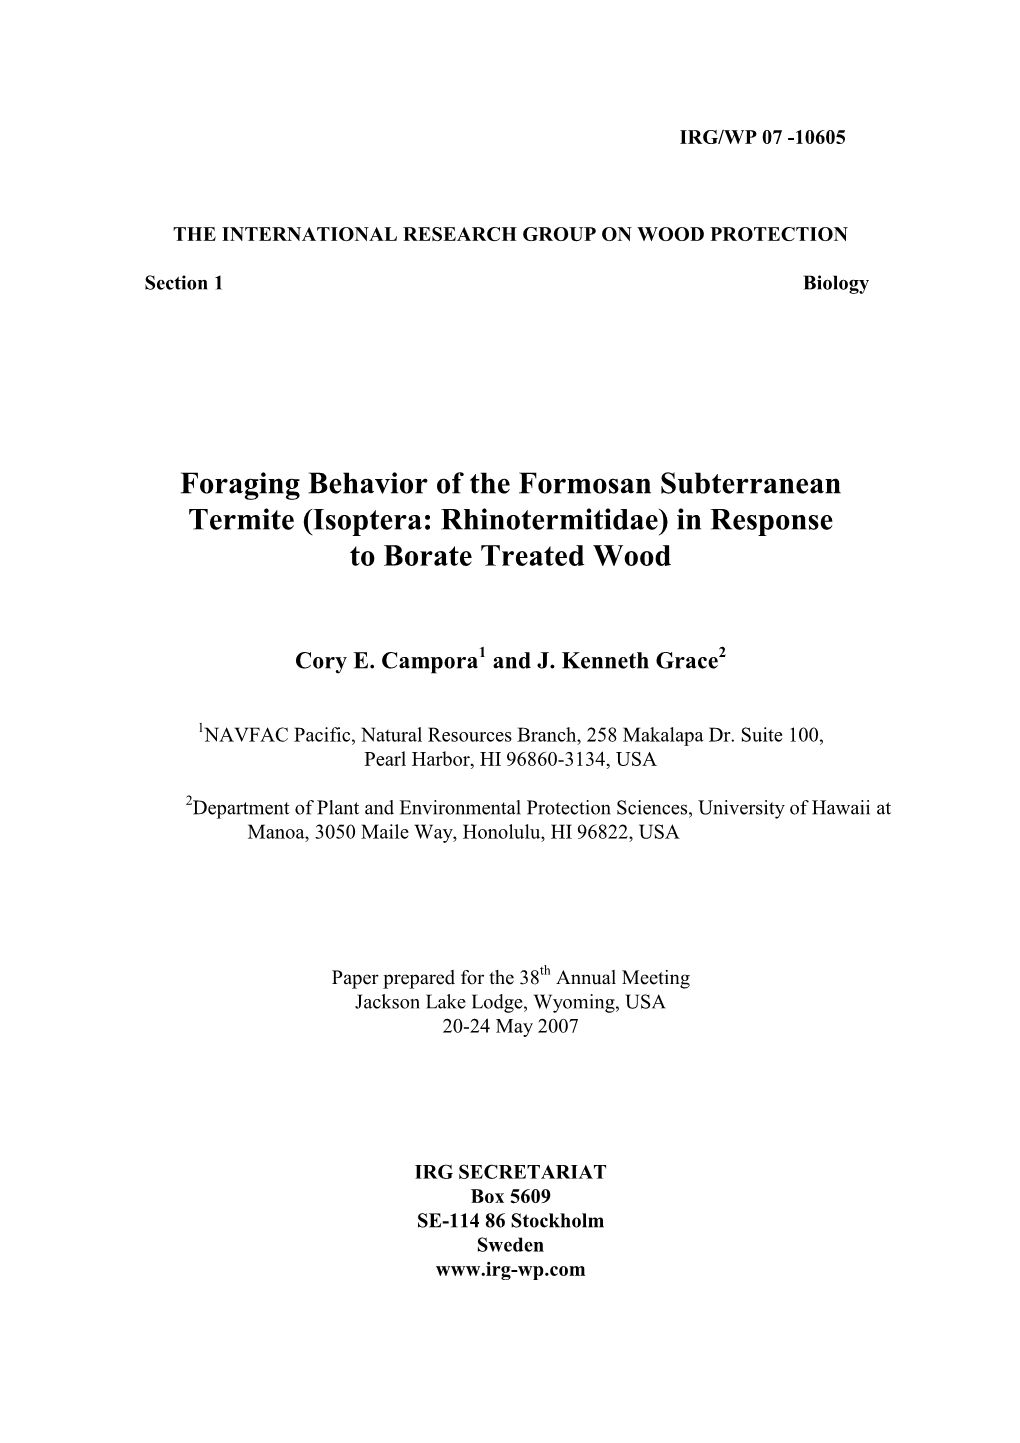 Foraging Behavior of the Formosan Subterranean Termite (Isoptera: Rhinotermitidae) in Response to Borate Treated Wood